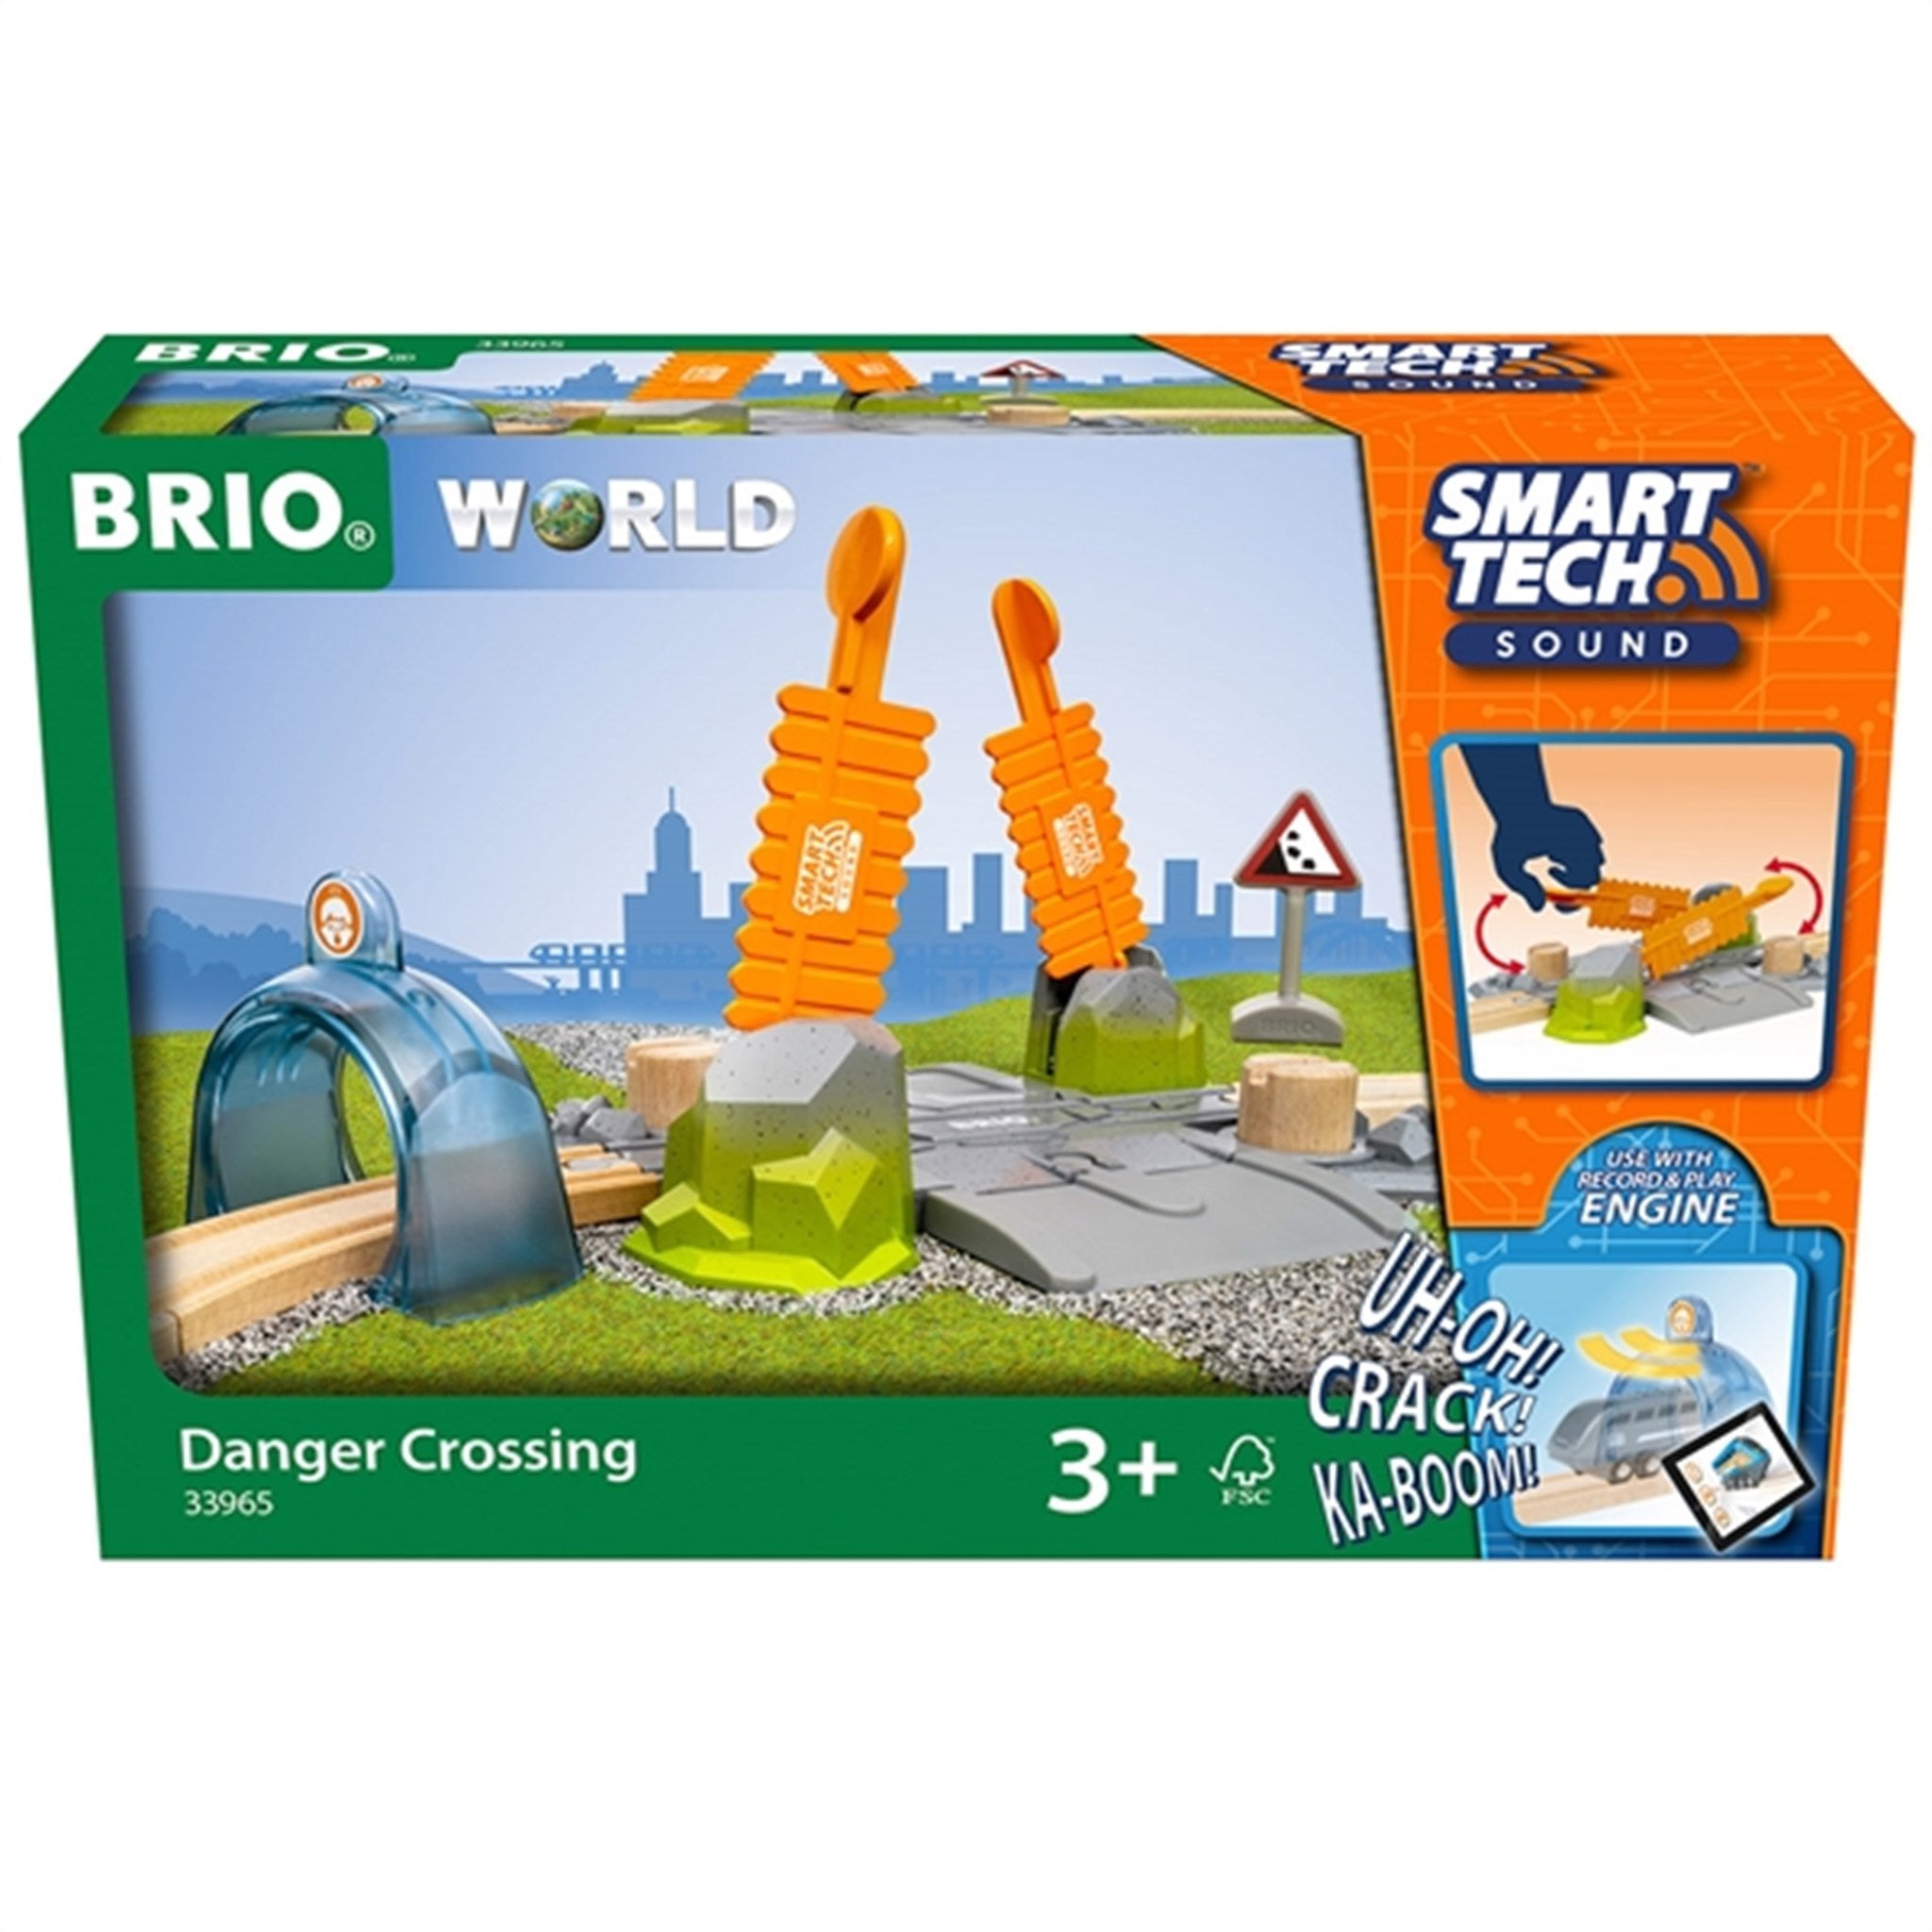 BRIO® Smart Tech Sound Danger Crossing 2